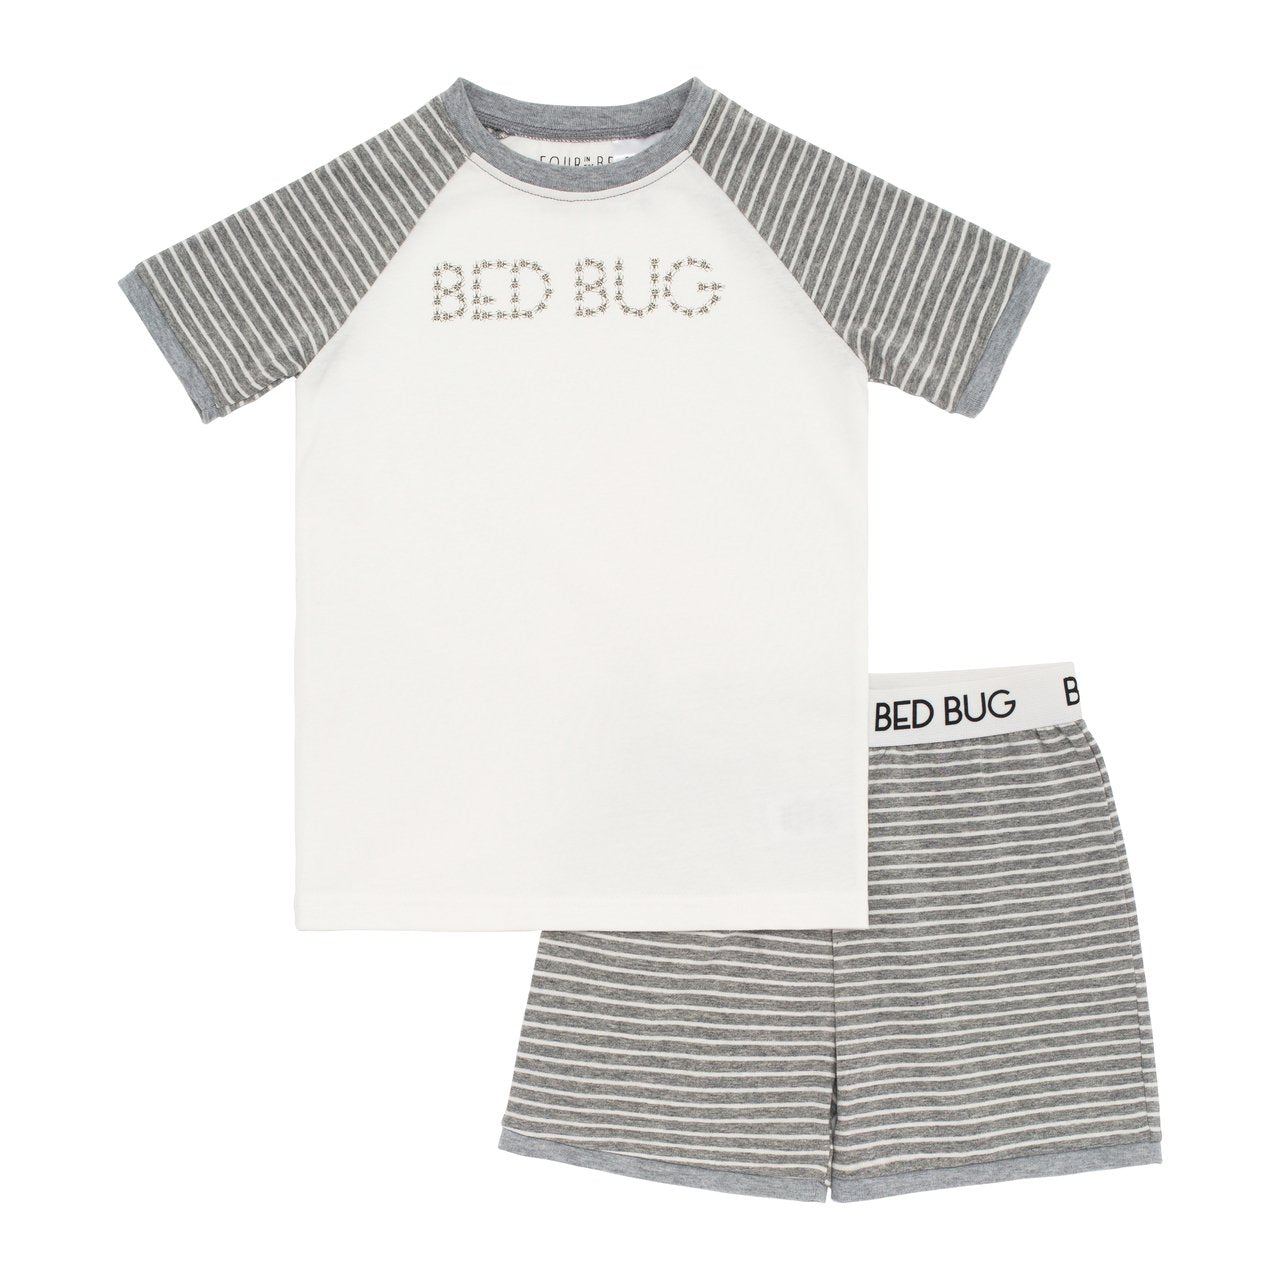 Boys 100% jersey cotton summer pyjamas - Grey bed bug